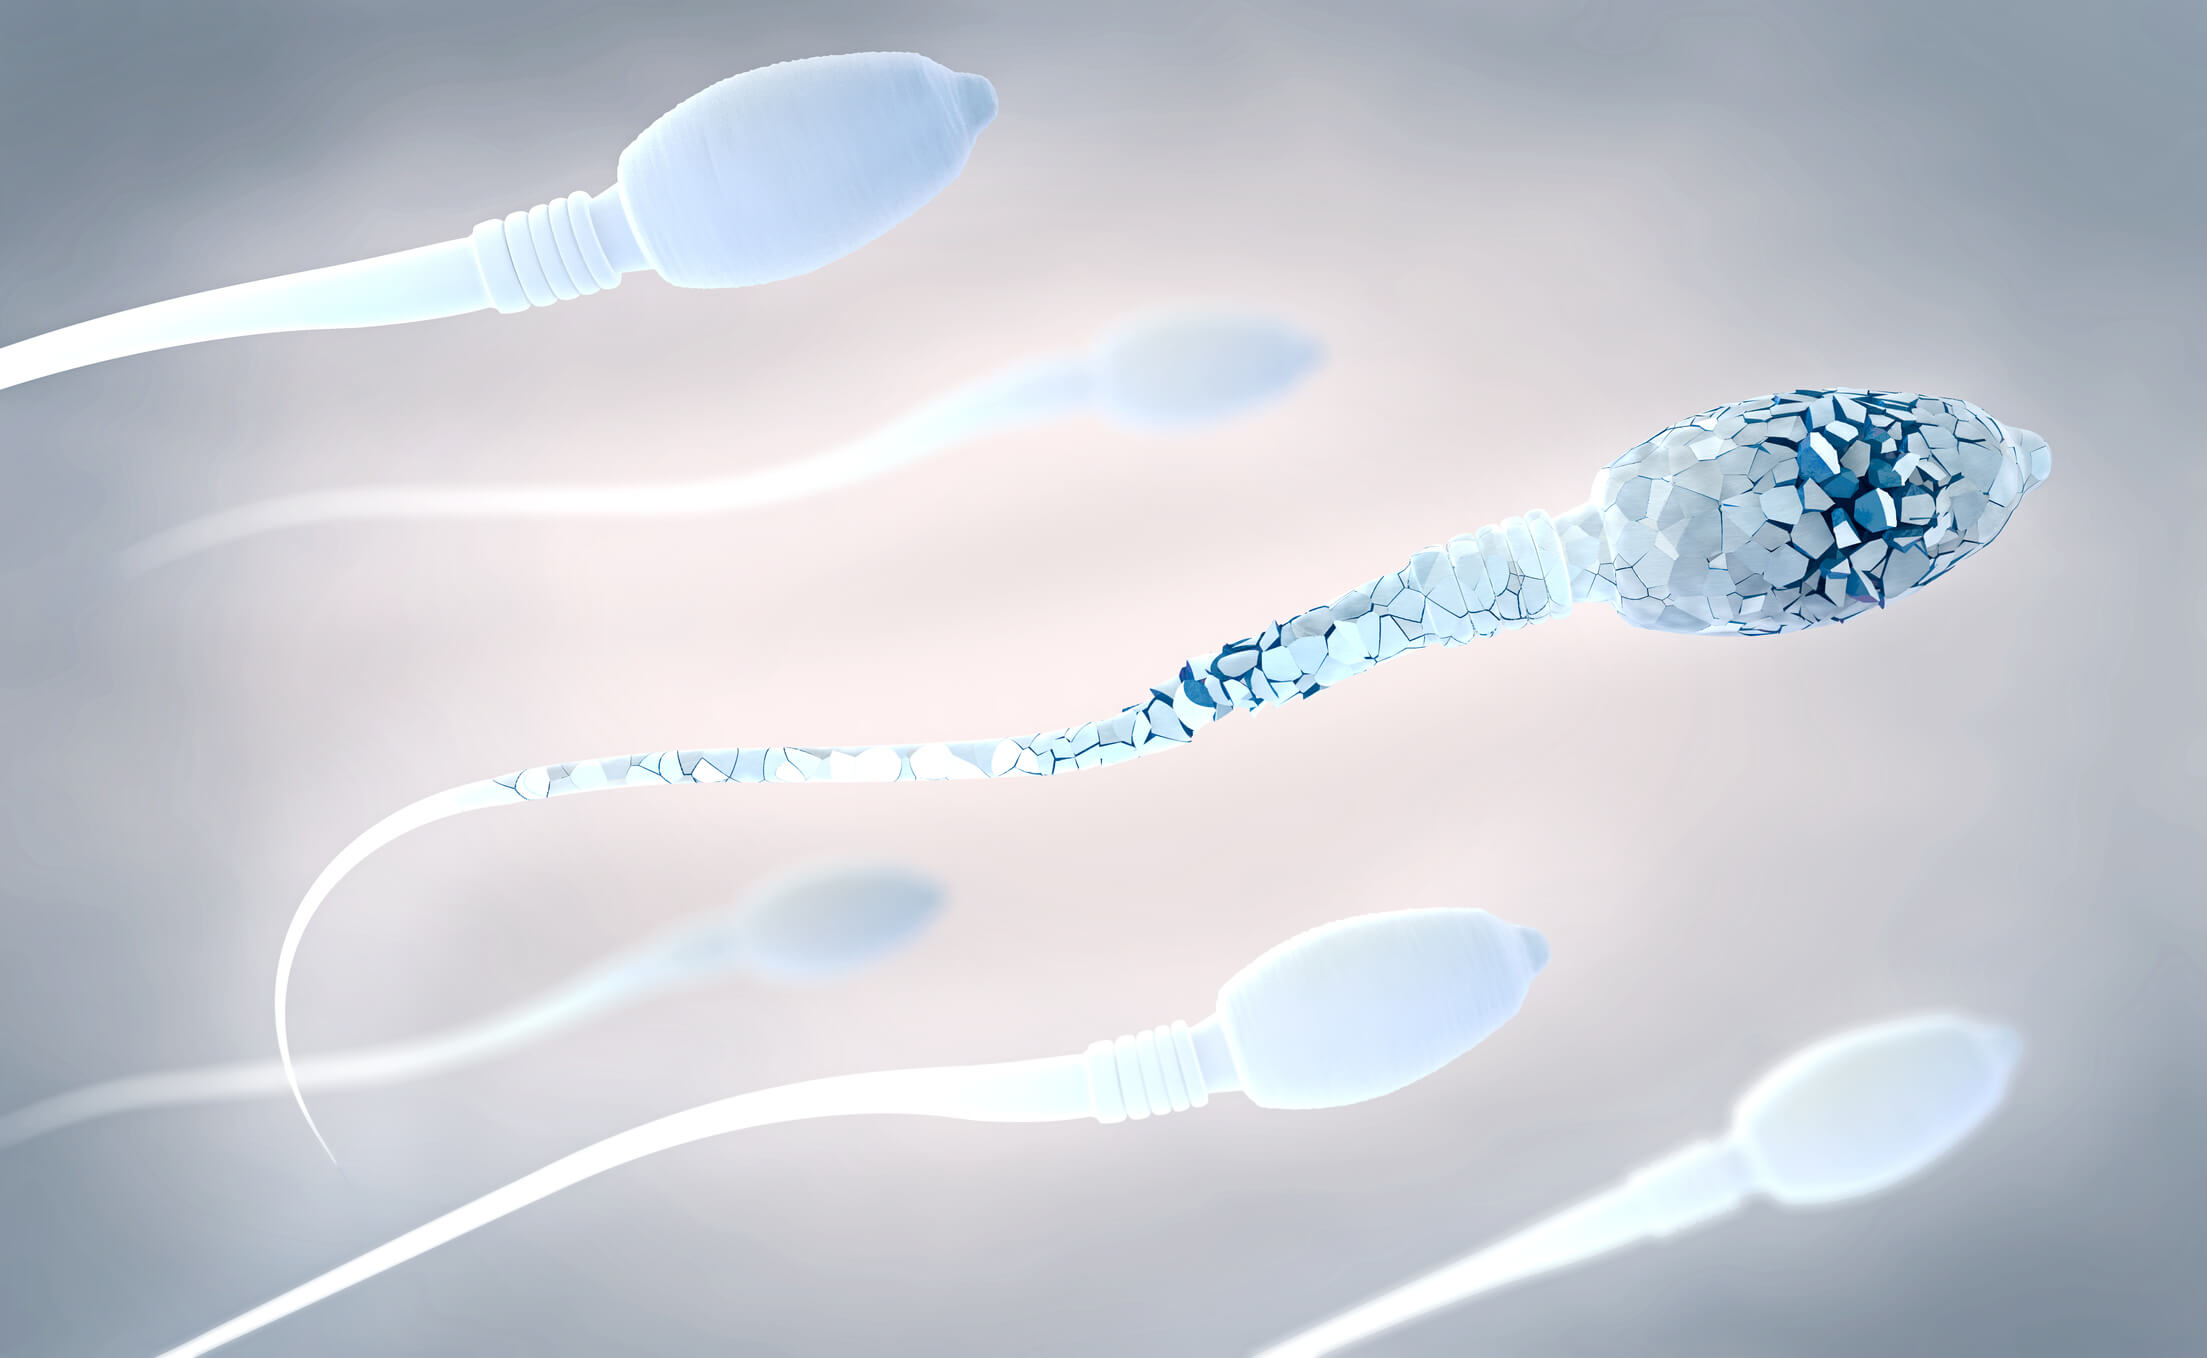 Body absorbs sperm